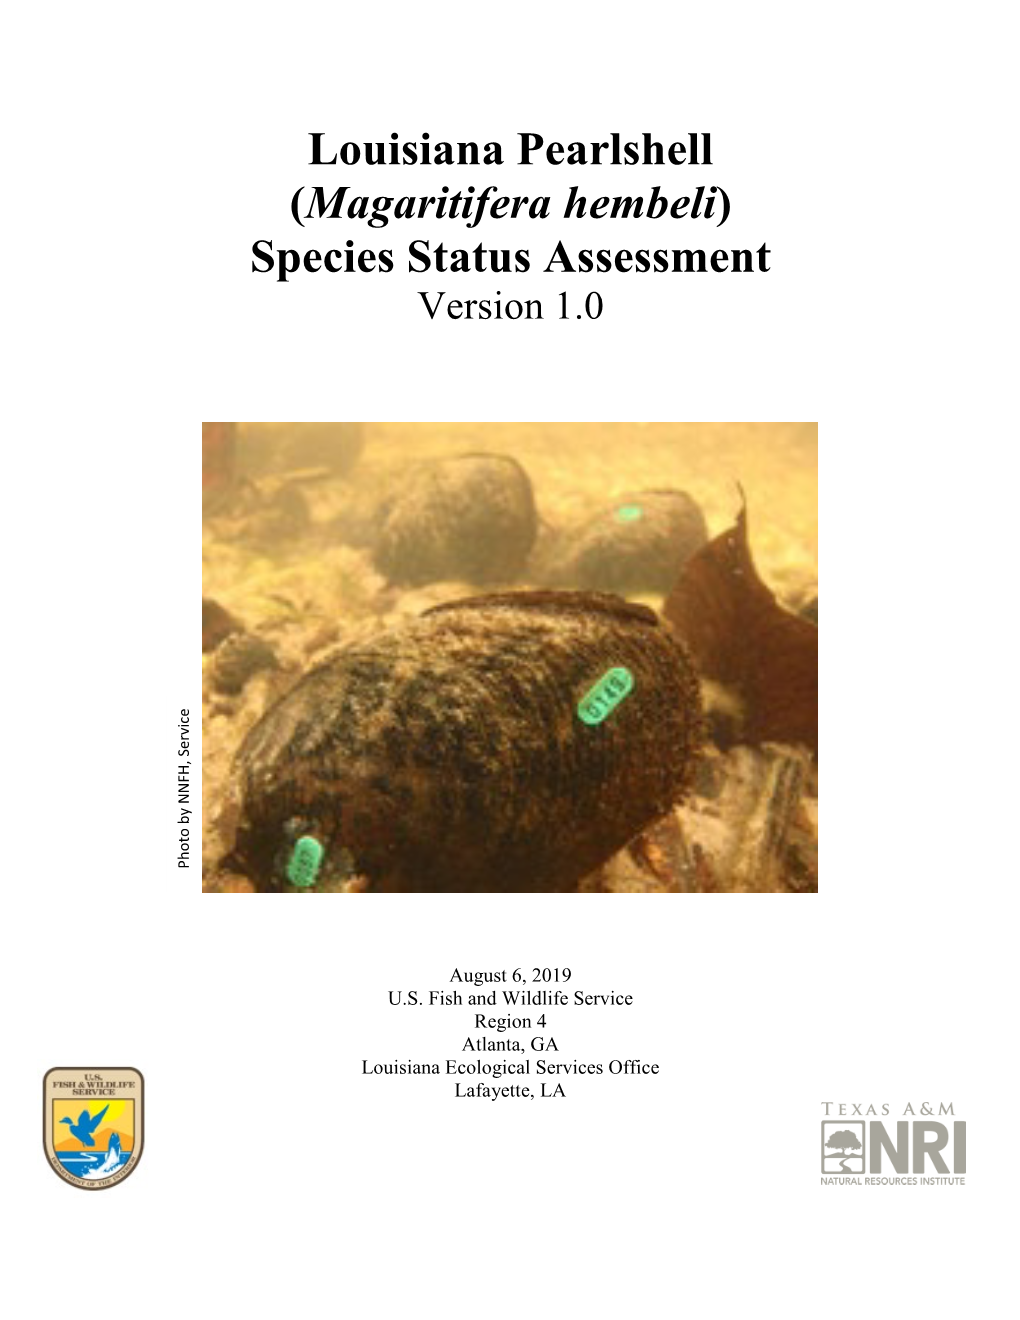 Louisiana Pearlshell (Magaritifera Hembeli) Species Status Assessment Version 1.0